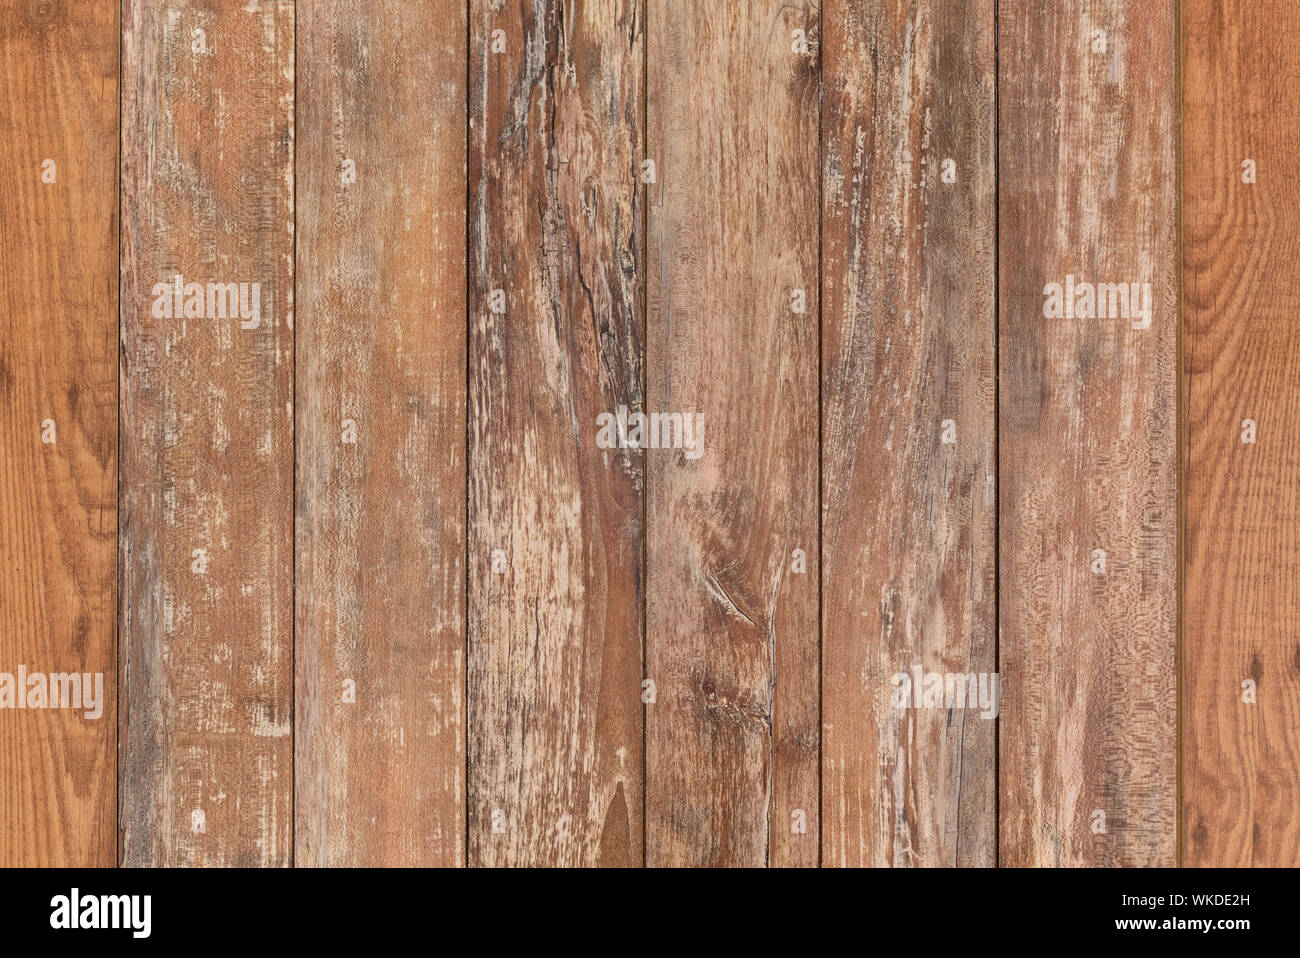 wooden floor or wall Stock Photo